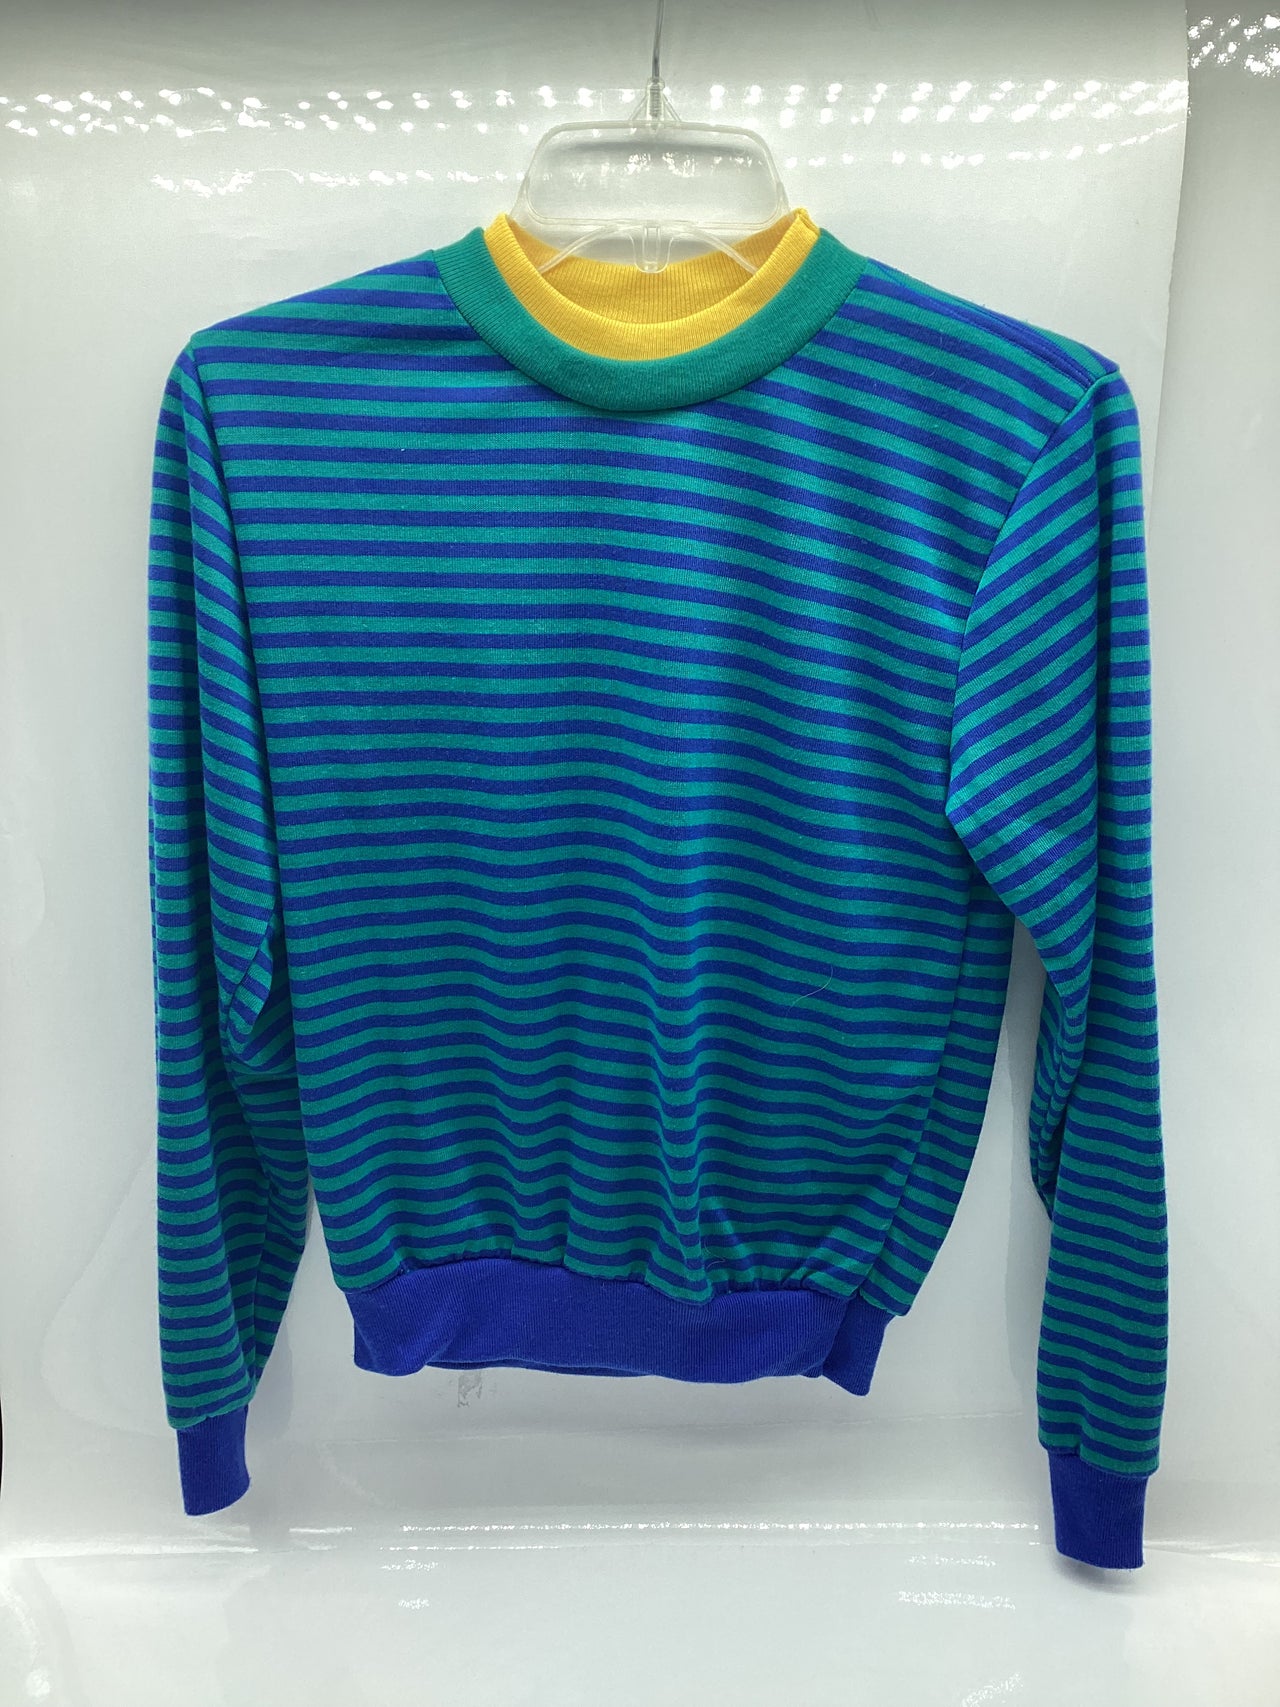 Apple Vintage - Apparel - Teal & Navy Blue Striped Sweater